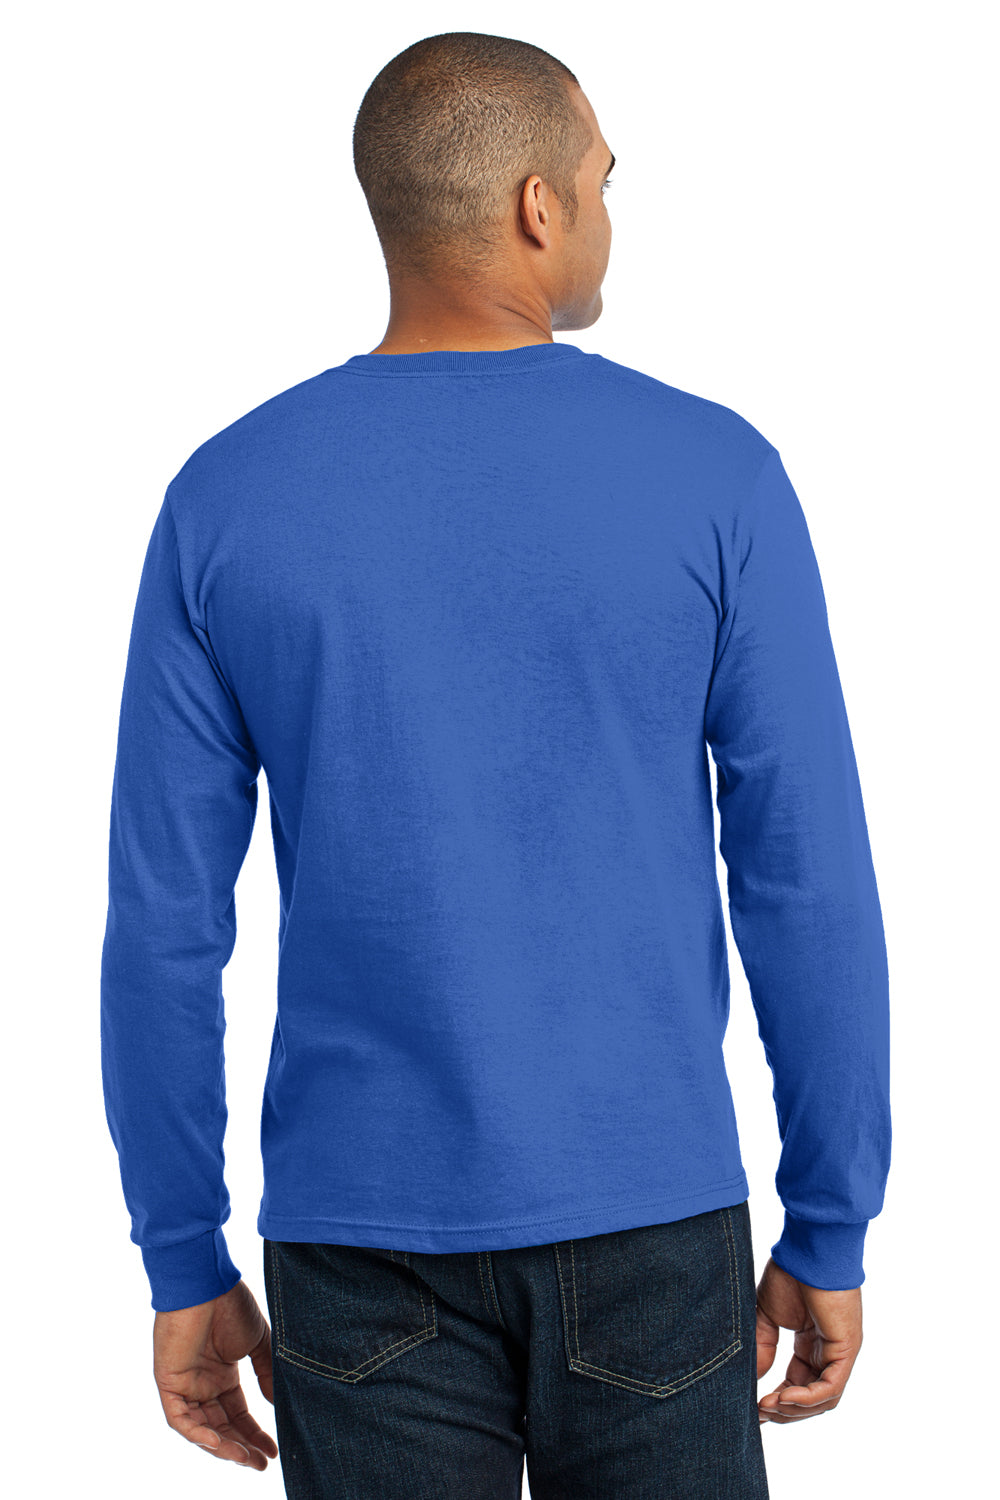 Port & Company USA100LS Mens USA Made Long Sleeve Crewneck T-Shirt Royal Blue Back